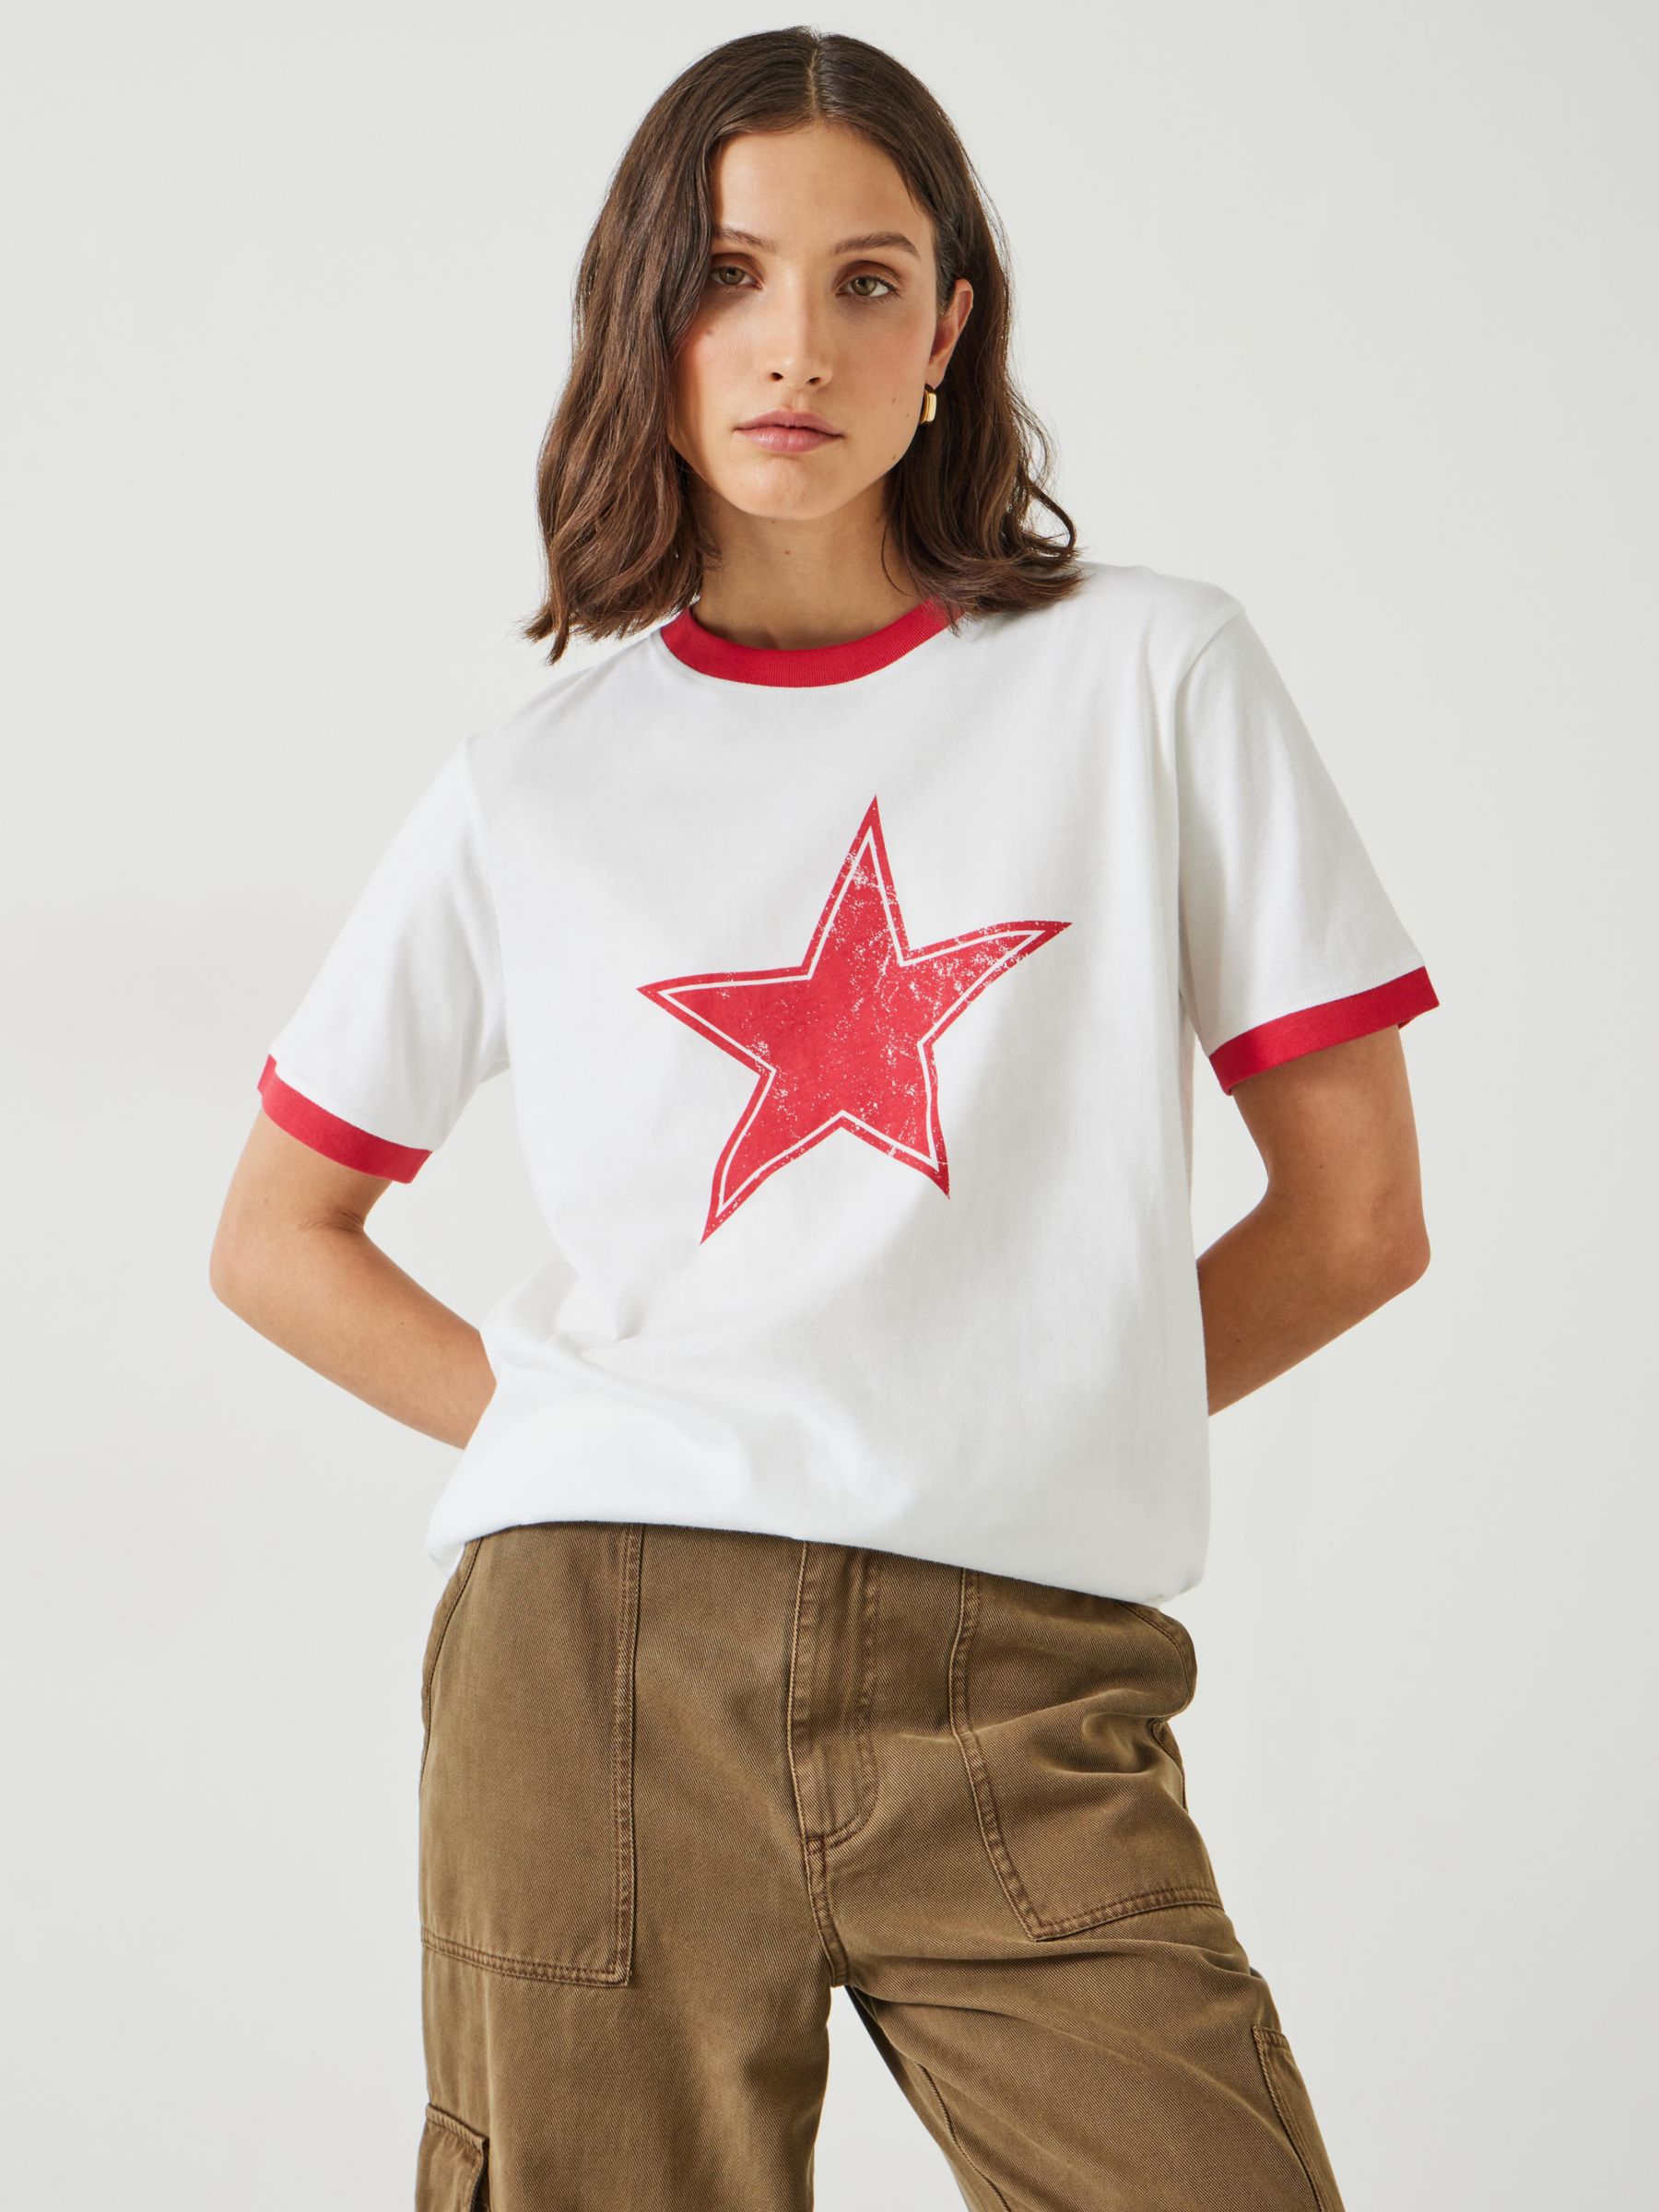 HUSH Shaan Star Ringer Cotton T-Shirt, White/Red, M